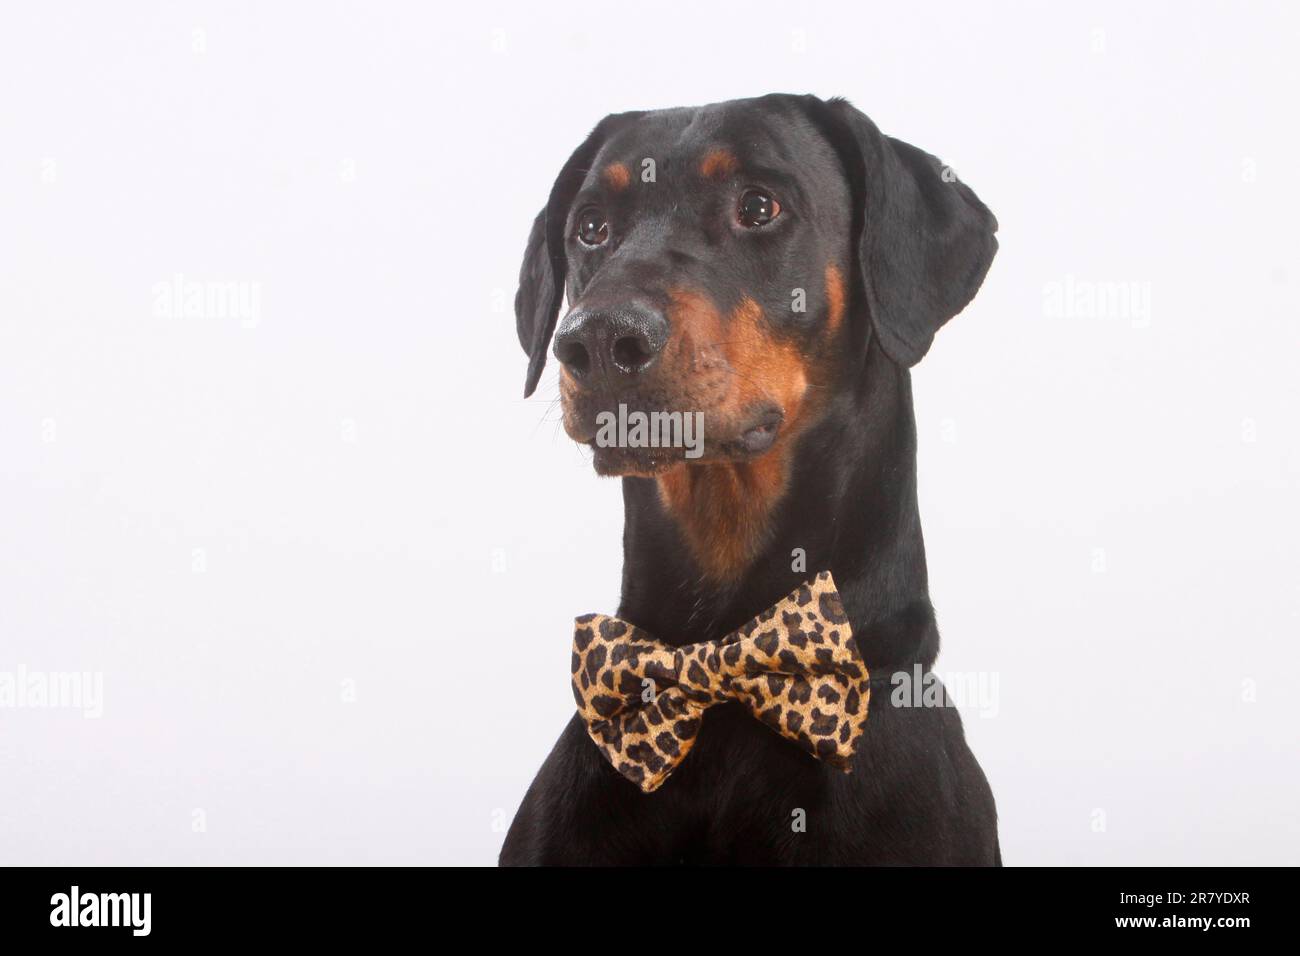 Doberman with bow tie Stock Photo